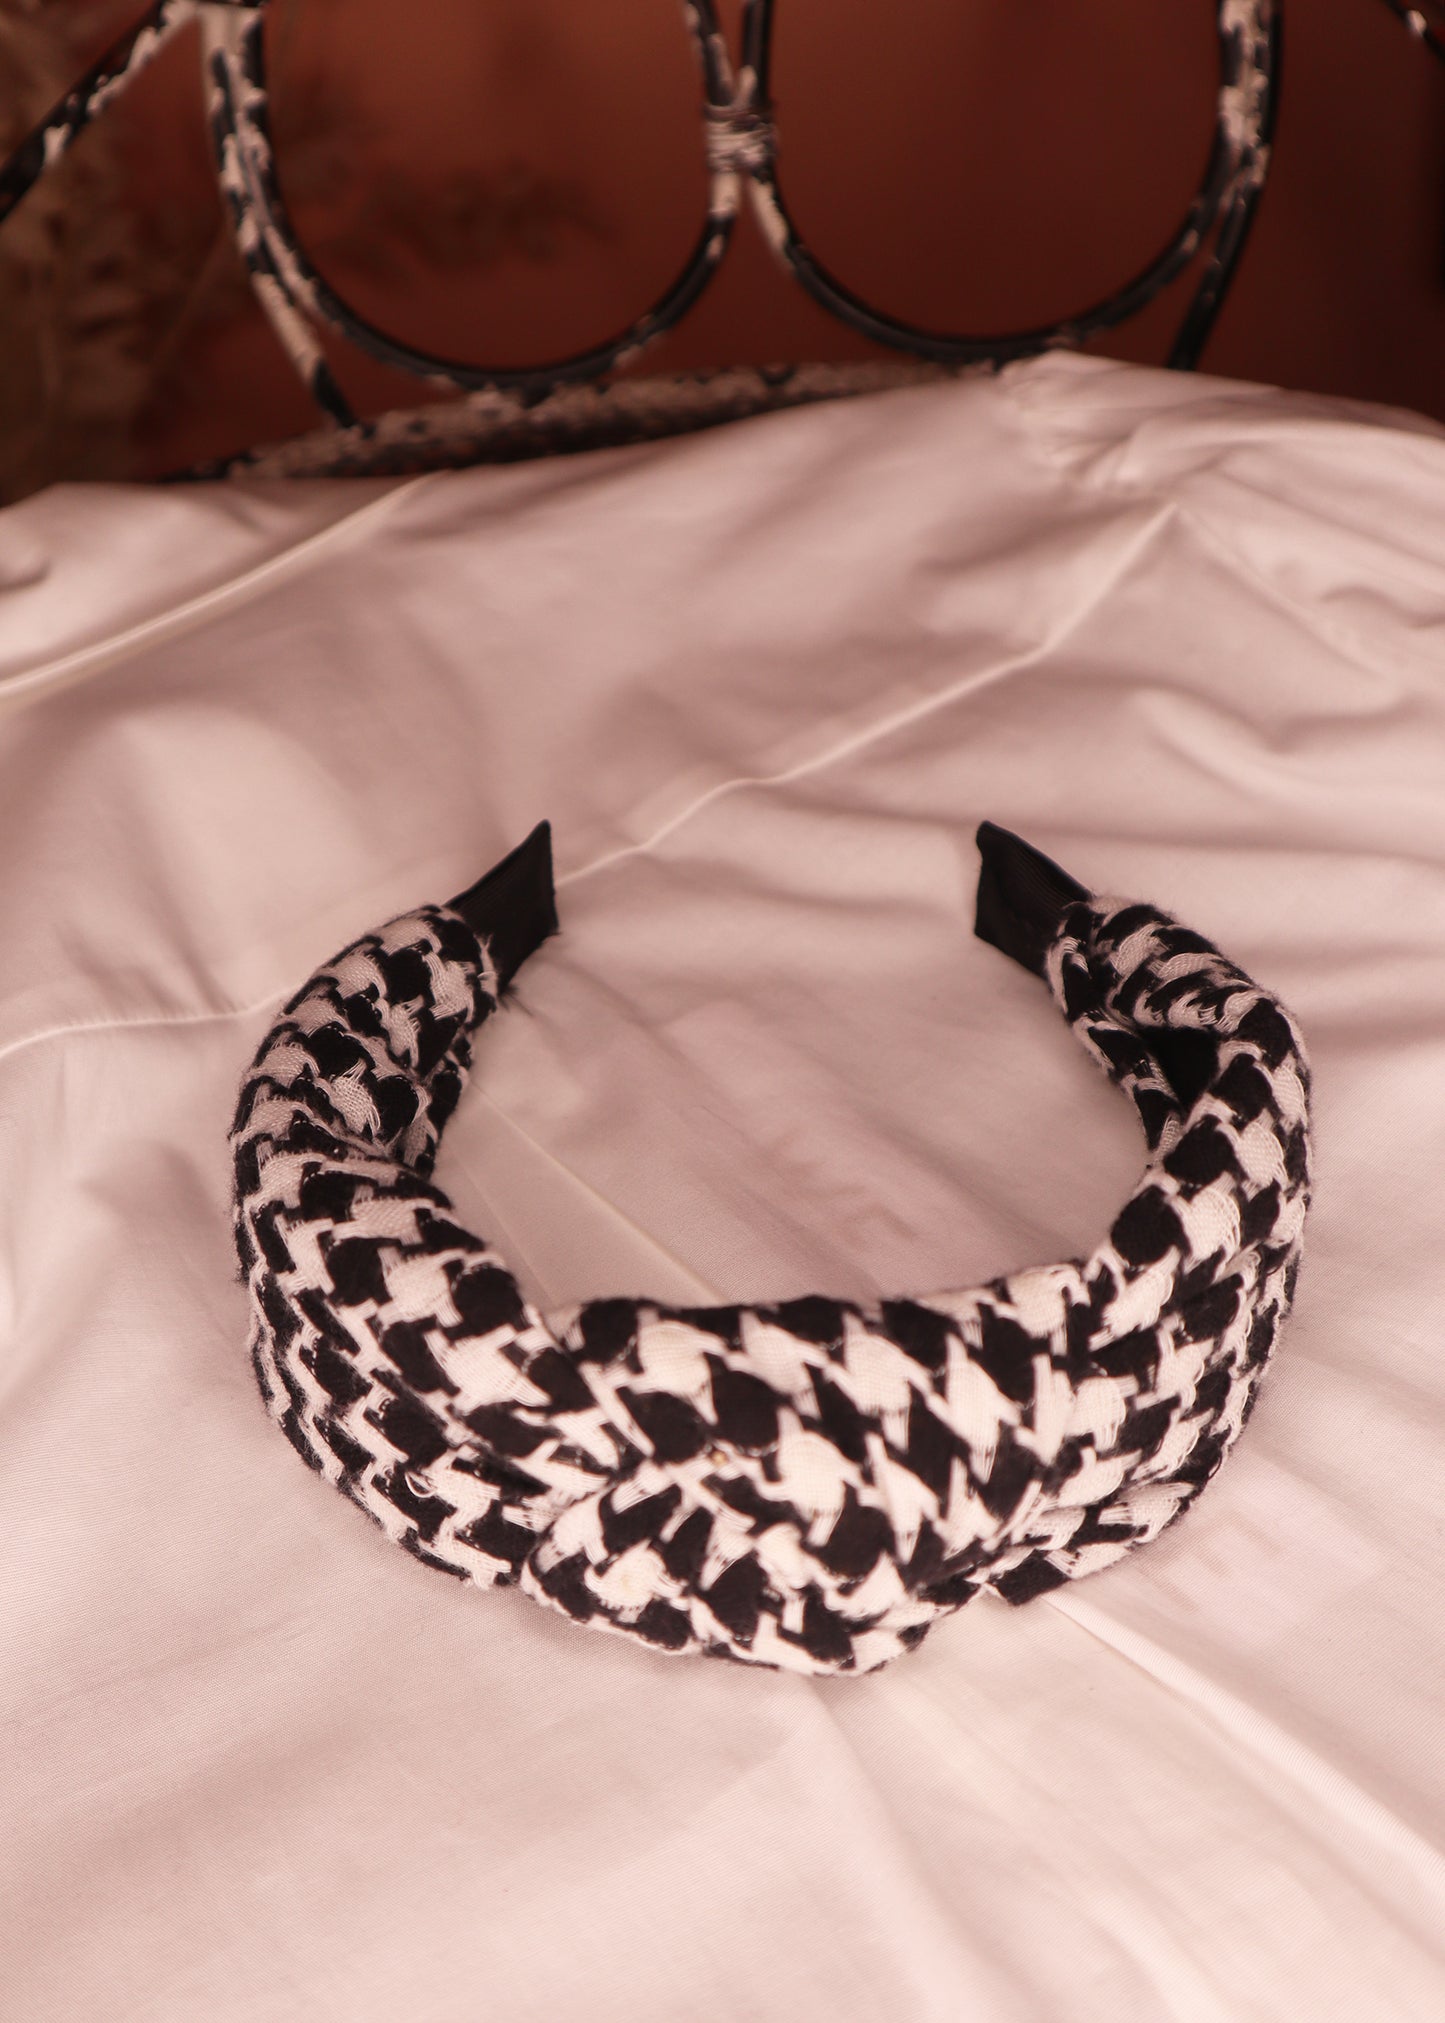 Knotted Headband (b&w)